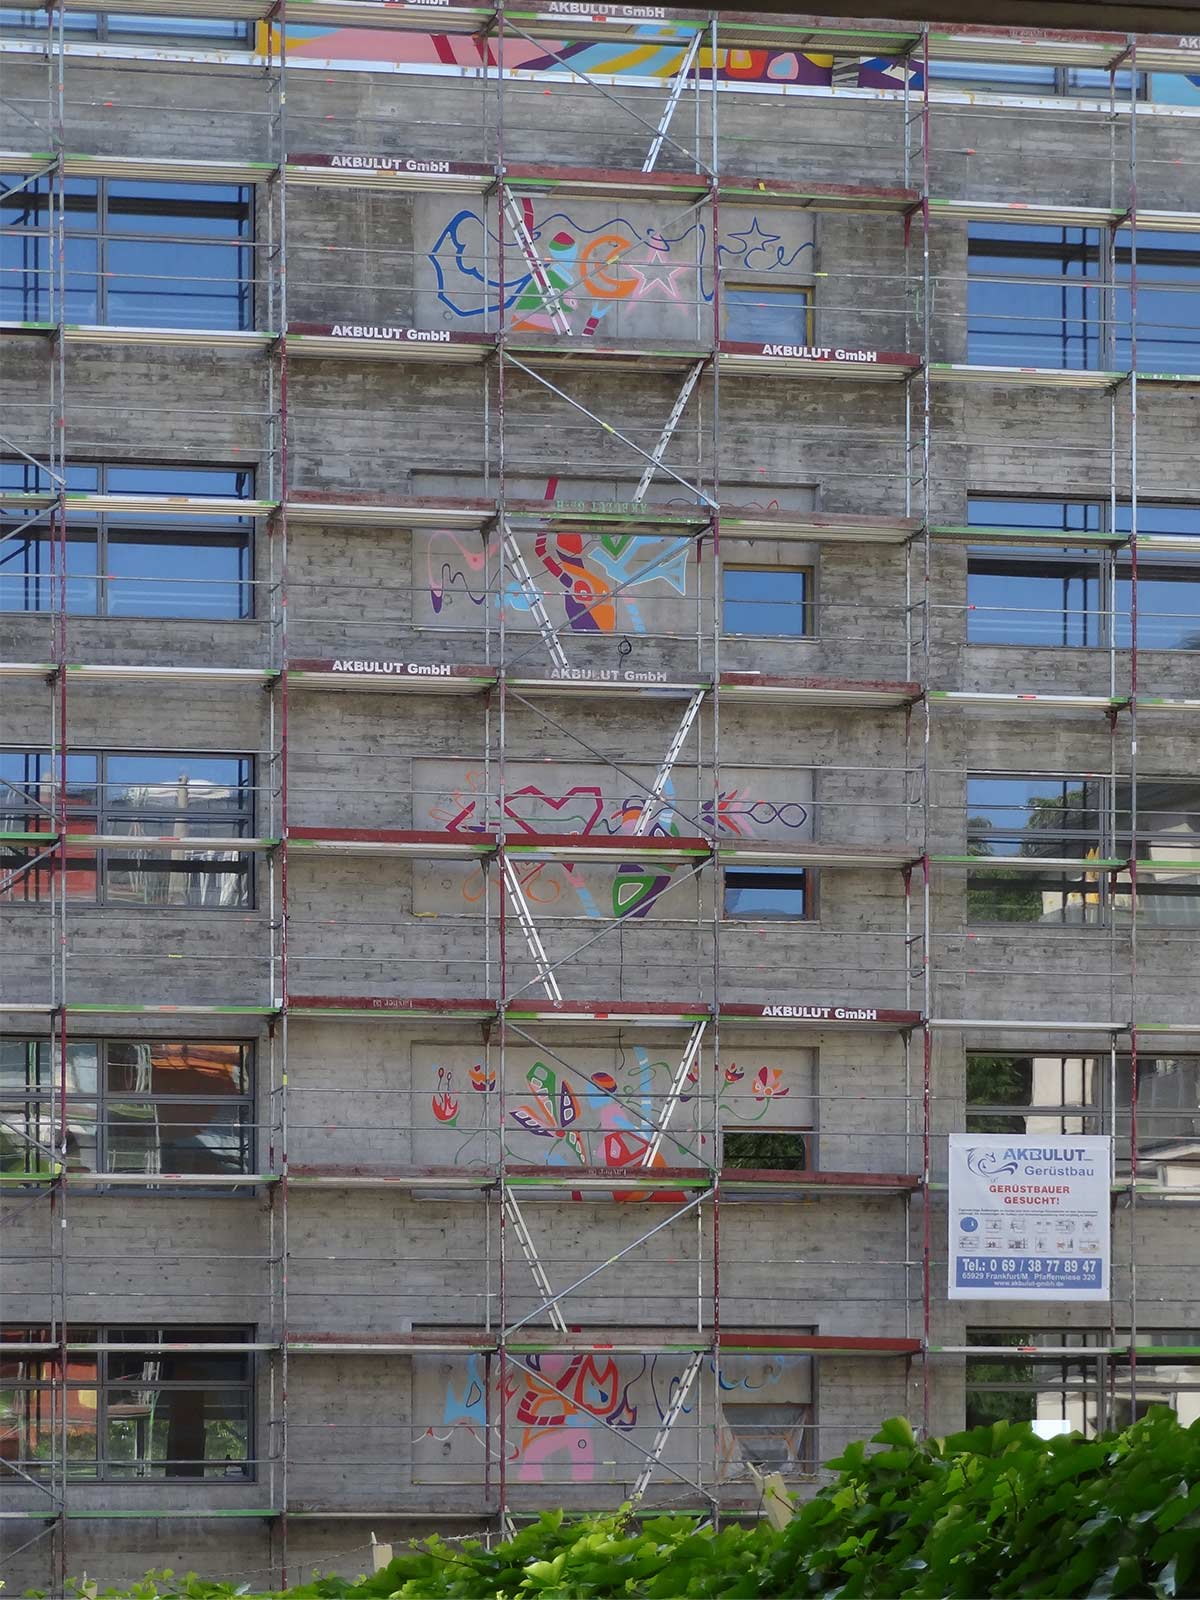 Mural Art Gallery in Frankfurt: Wetopia - We paint the city